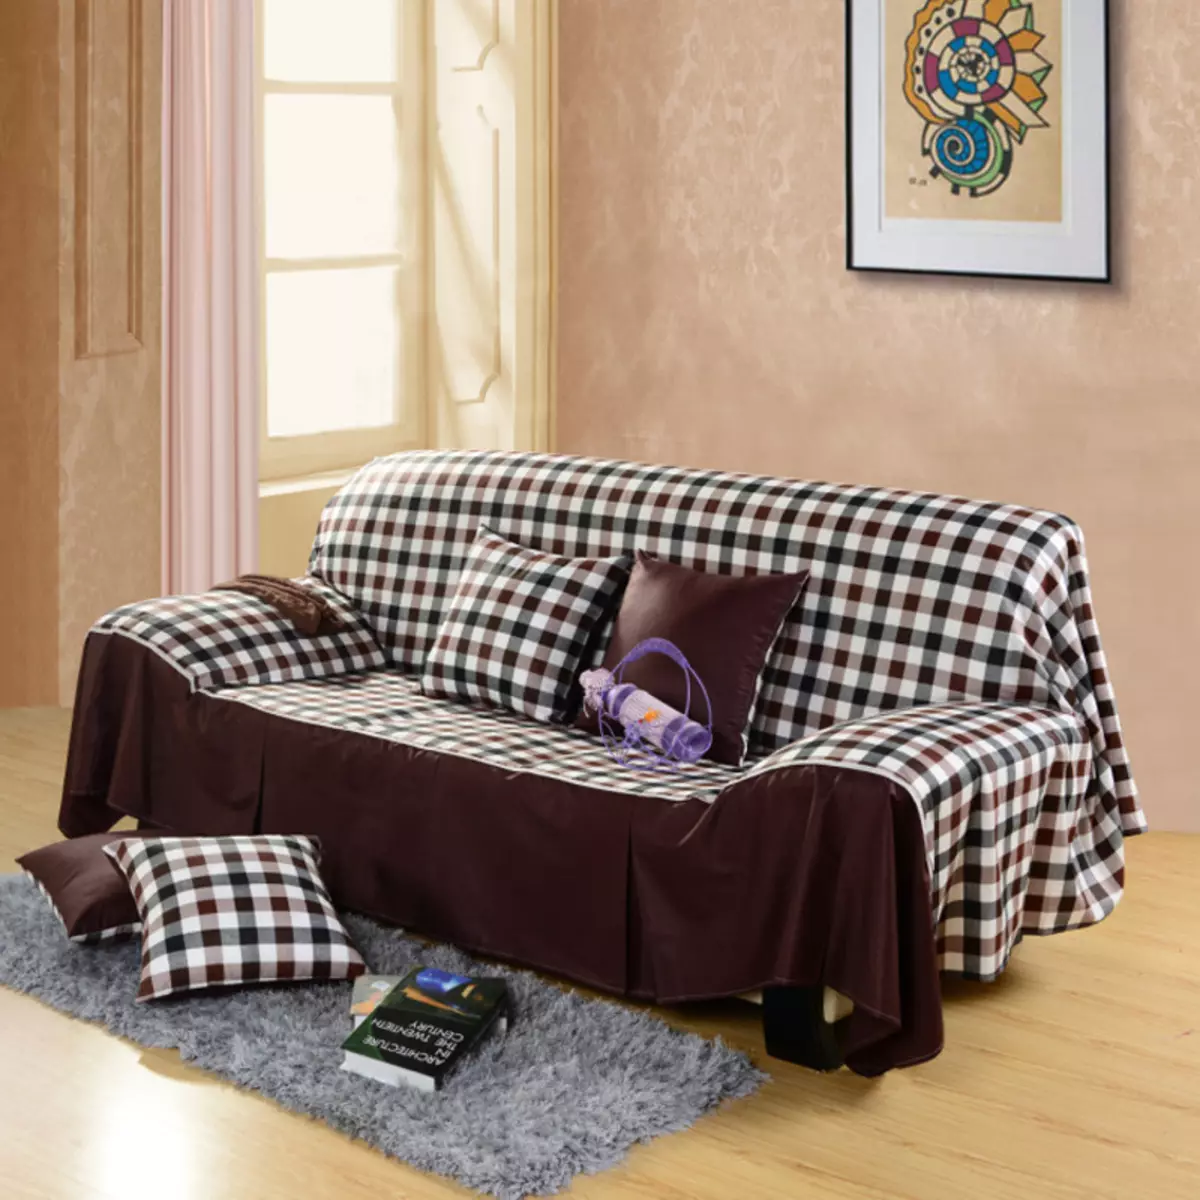 Pokriveni na kauč (84 fotografije): pregled tapiserija i pletenih kaidu, odabir skupova za kauč i fotelje, tepih, krzno i ​​druge opcije 9062_27